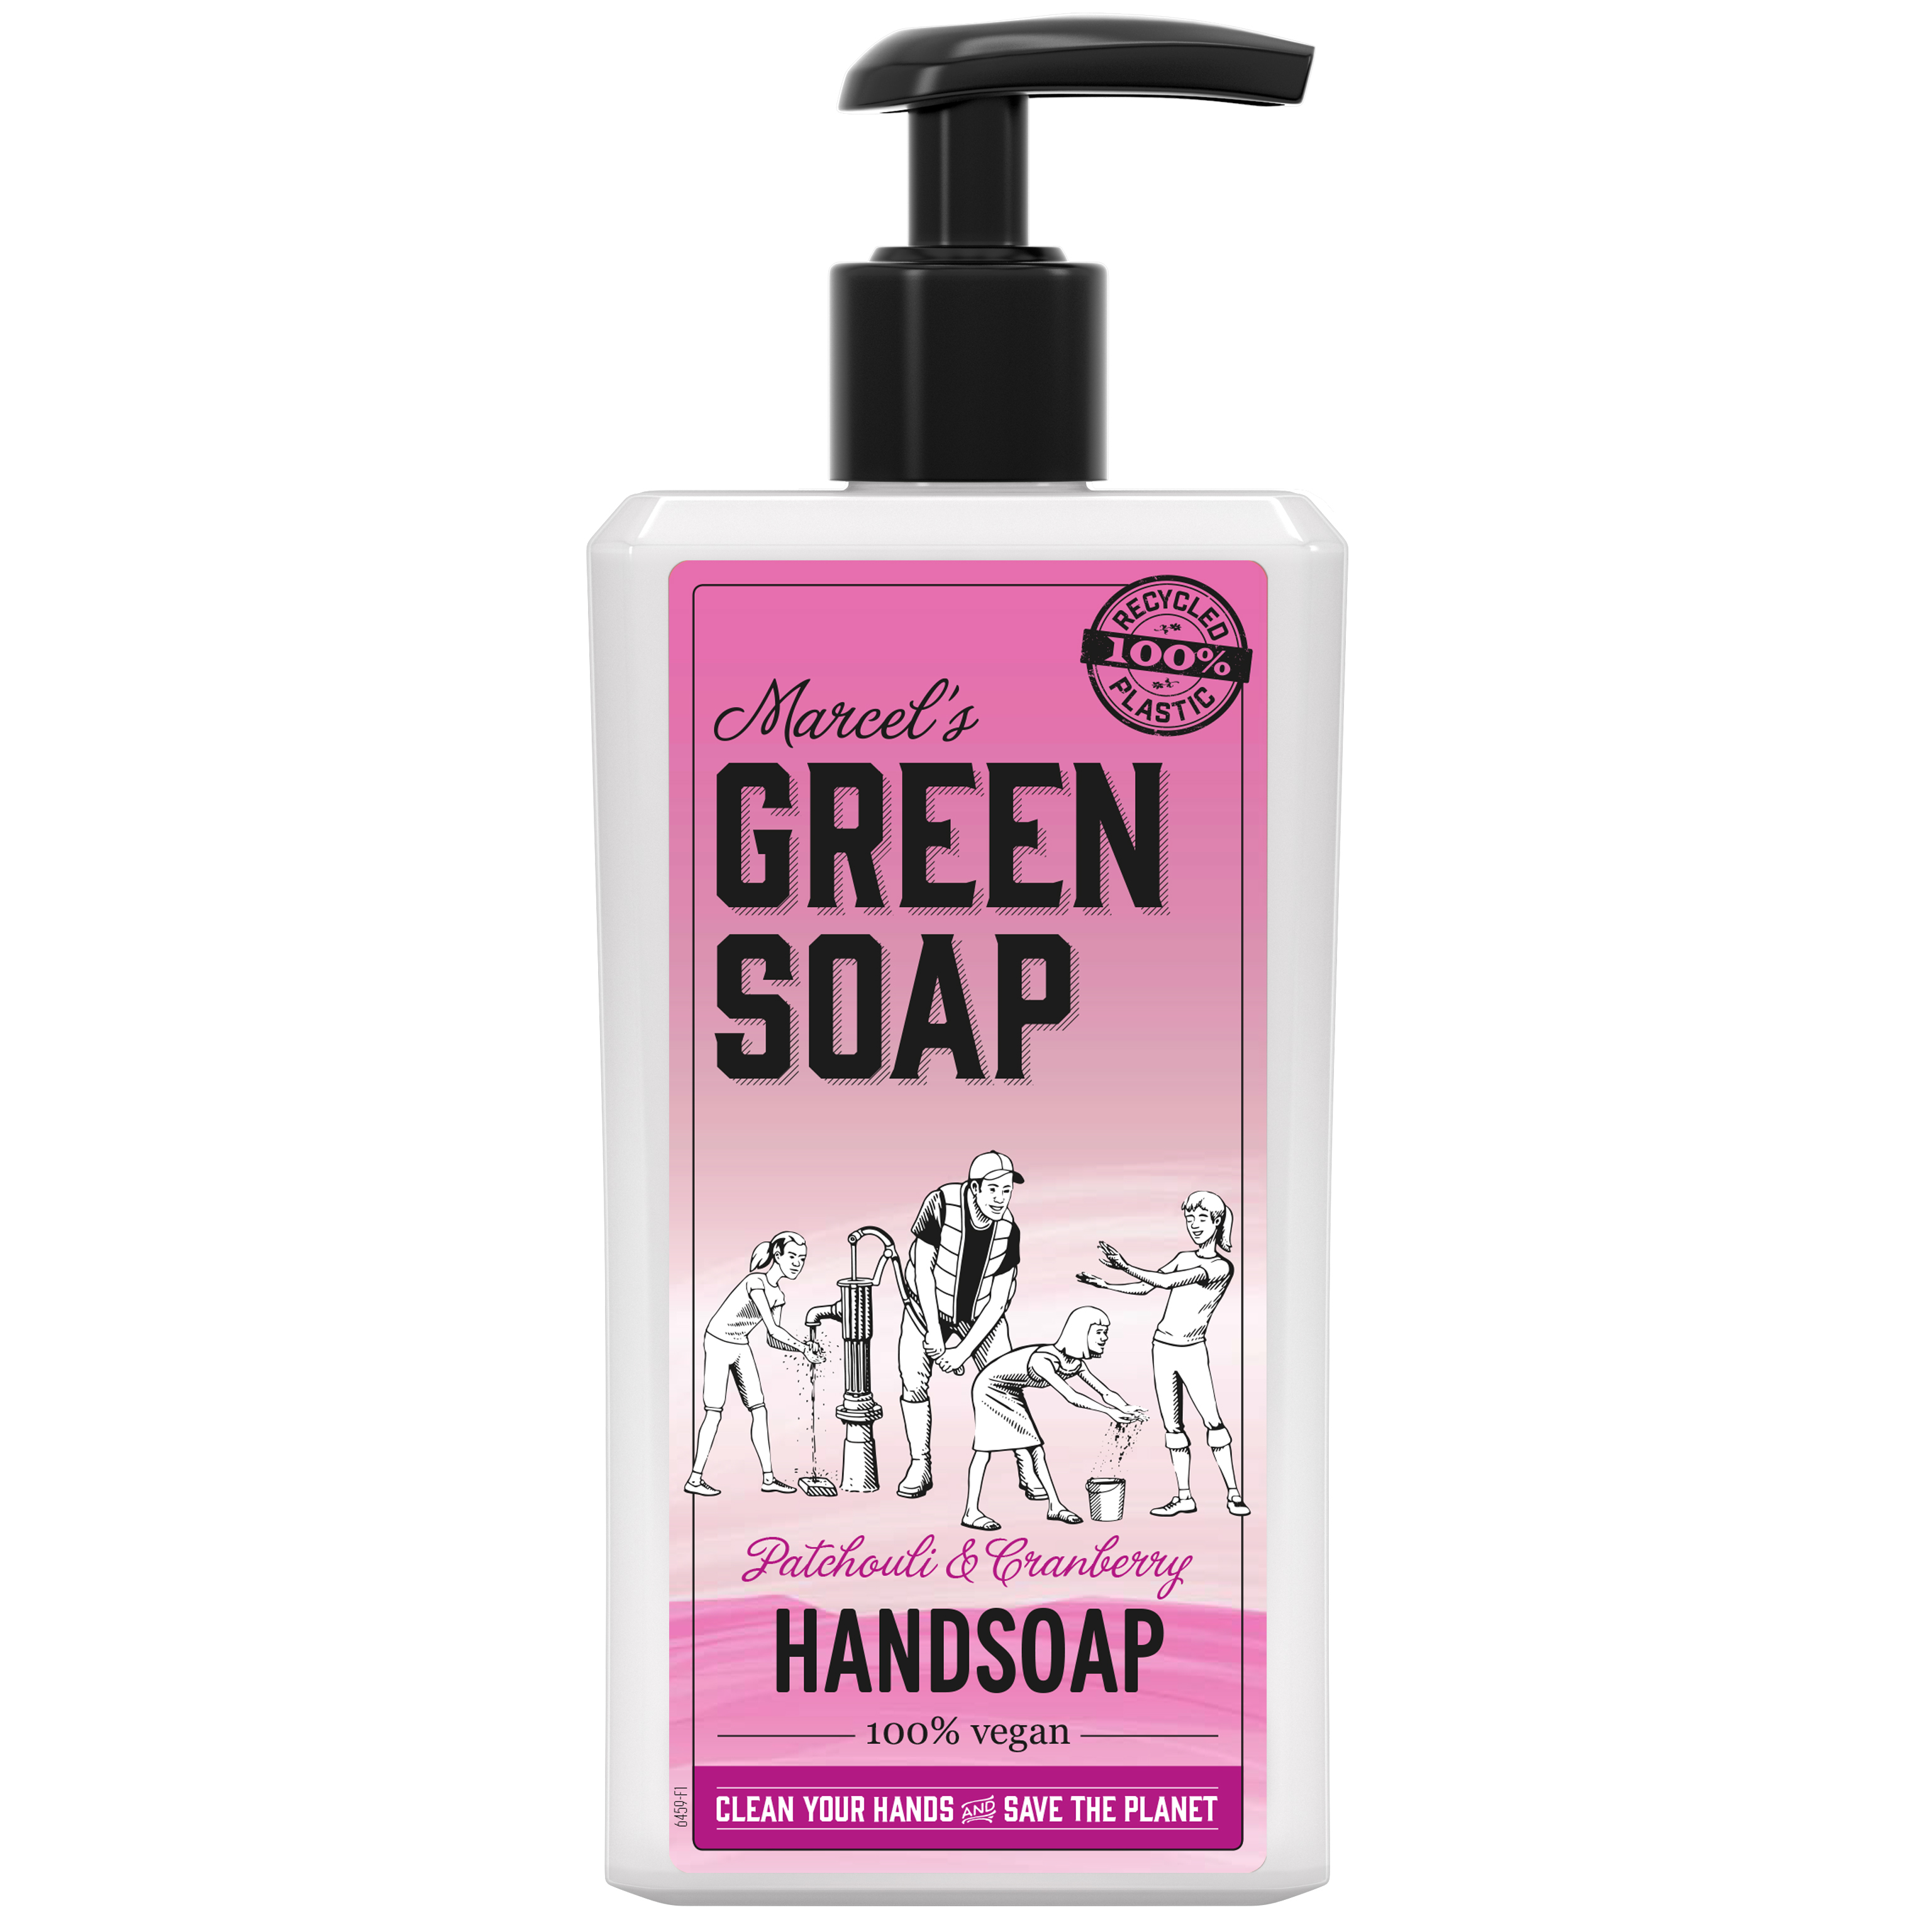 GREEN SOAP HZ PATCH CRAN POMP 500ML